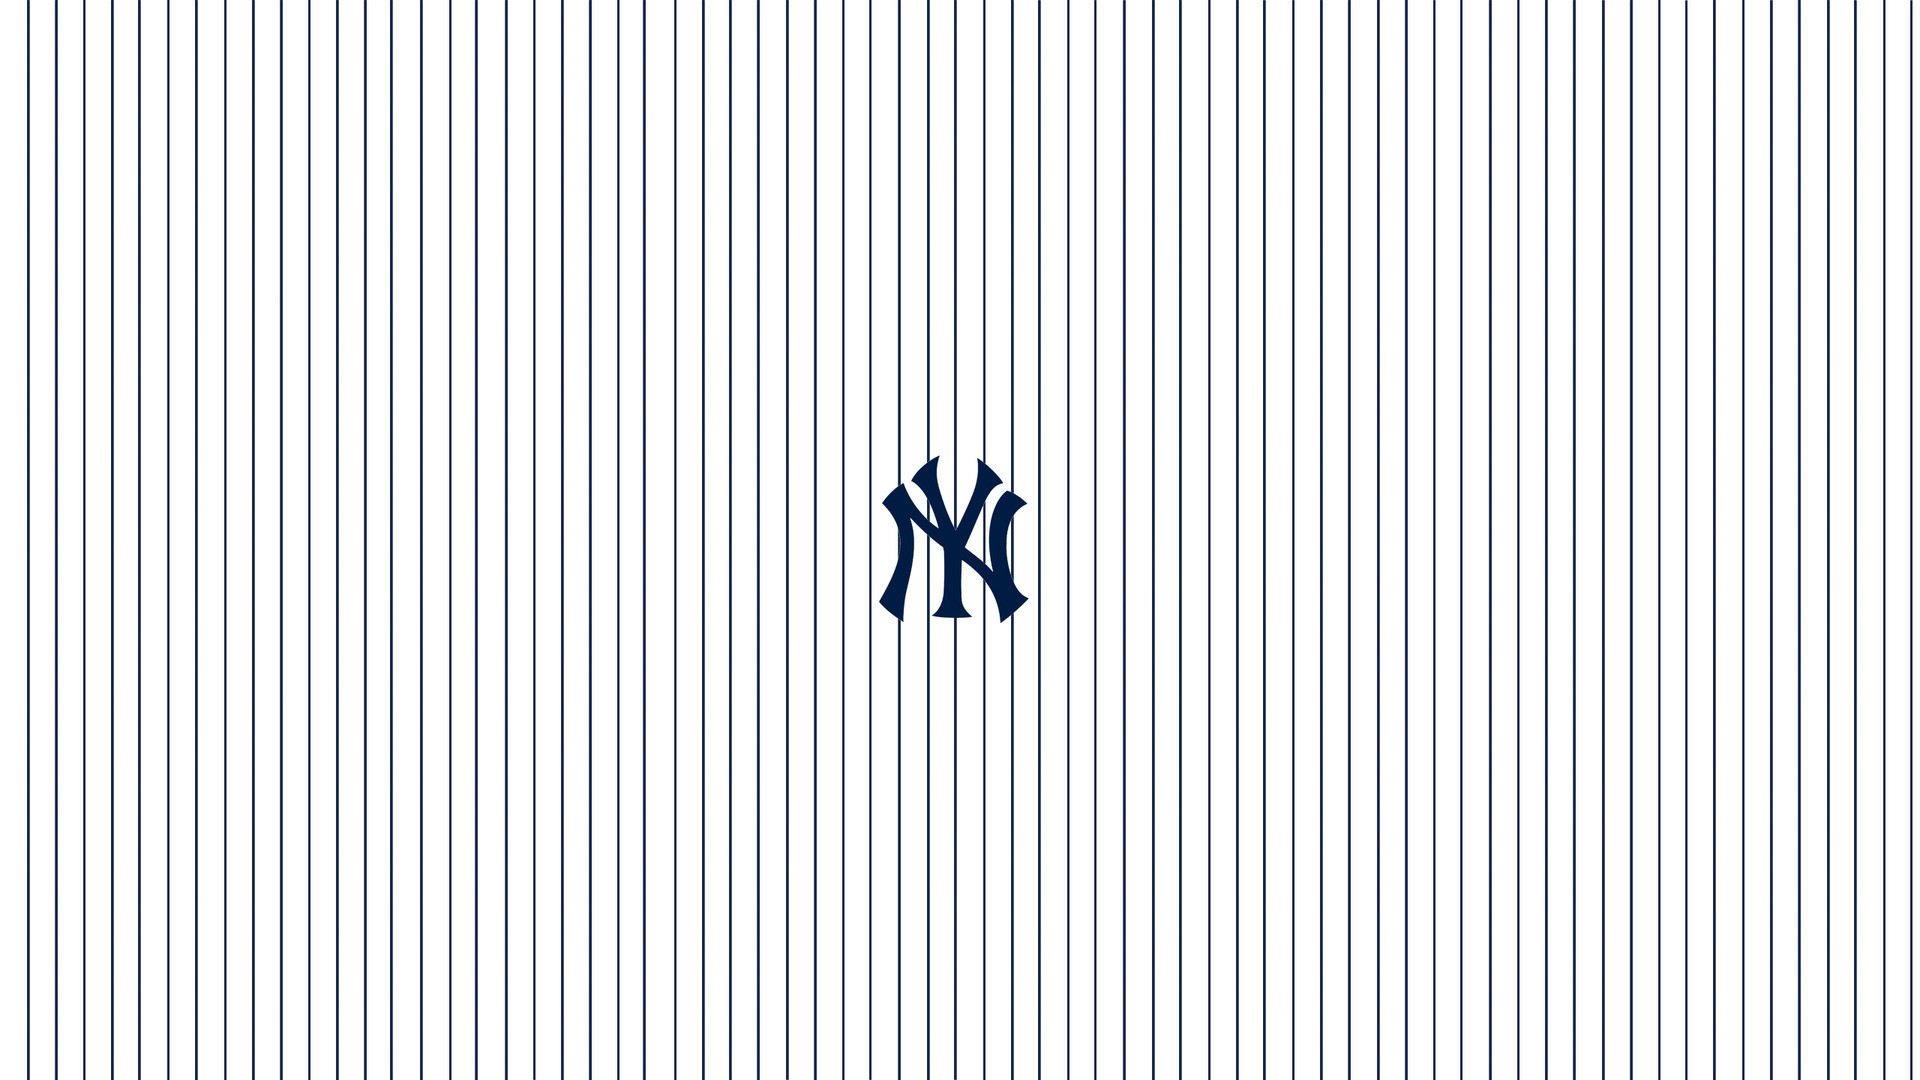 New York Yankees Background